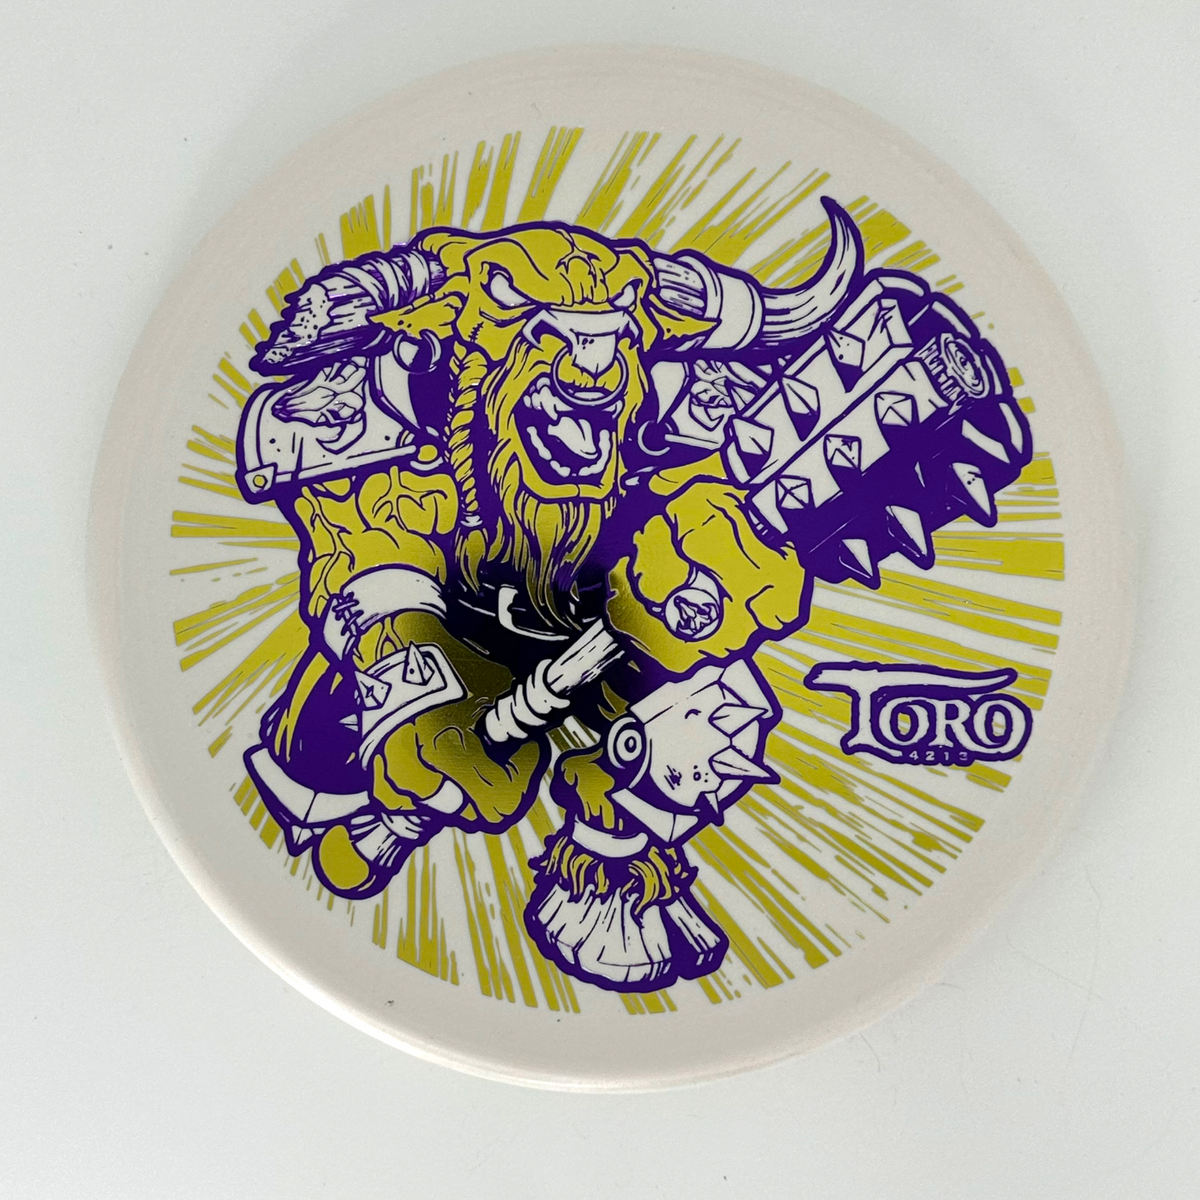 Innova R-Pro Toro - War Toro